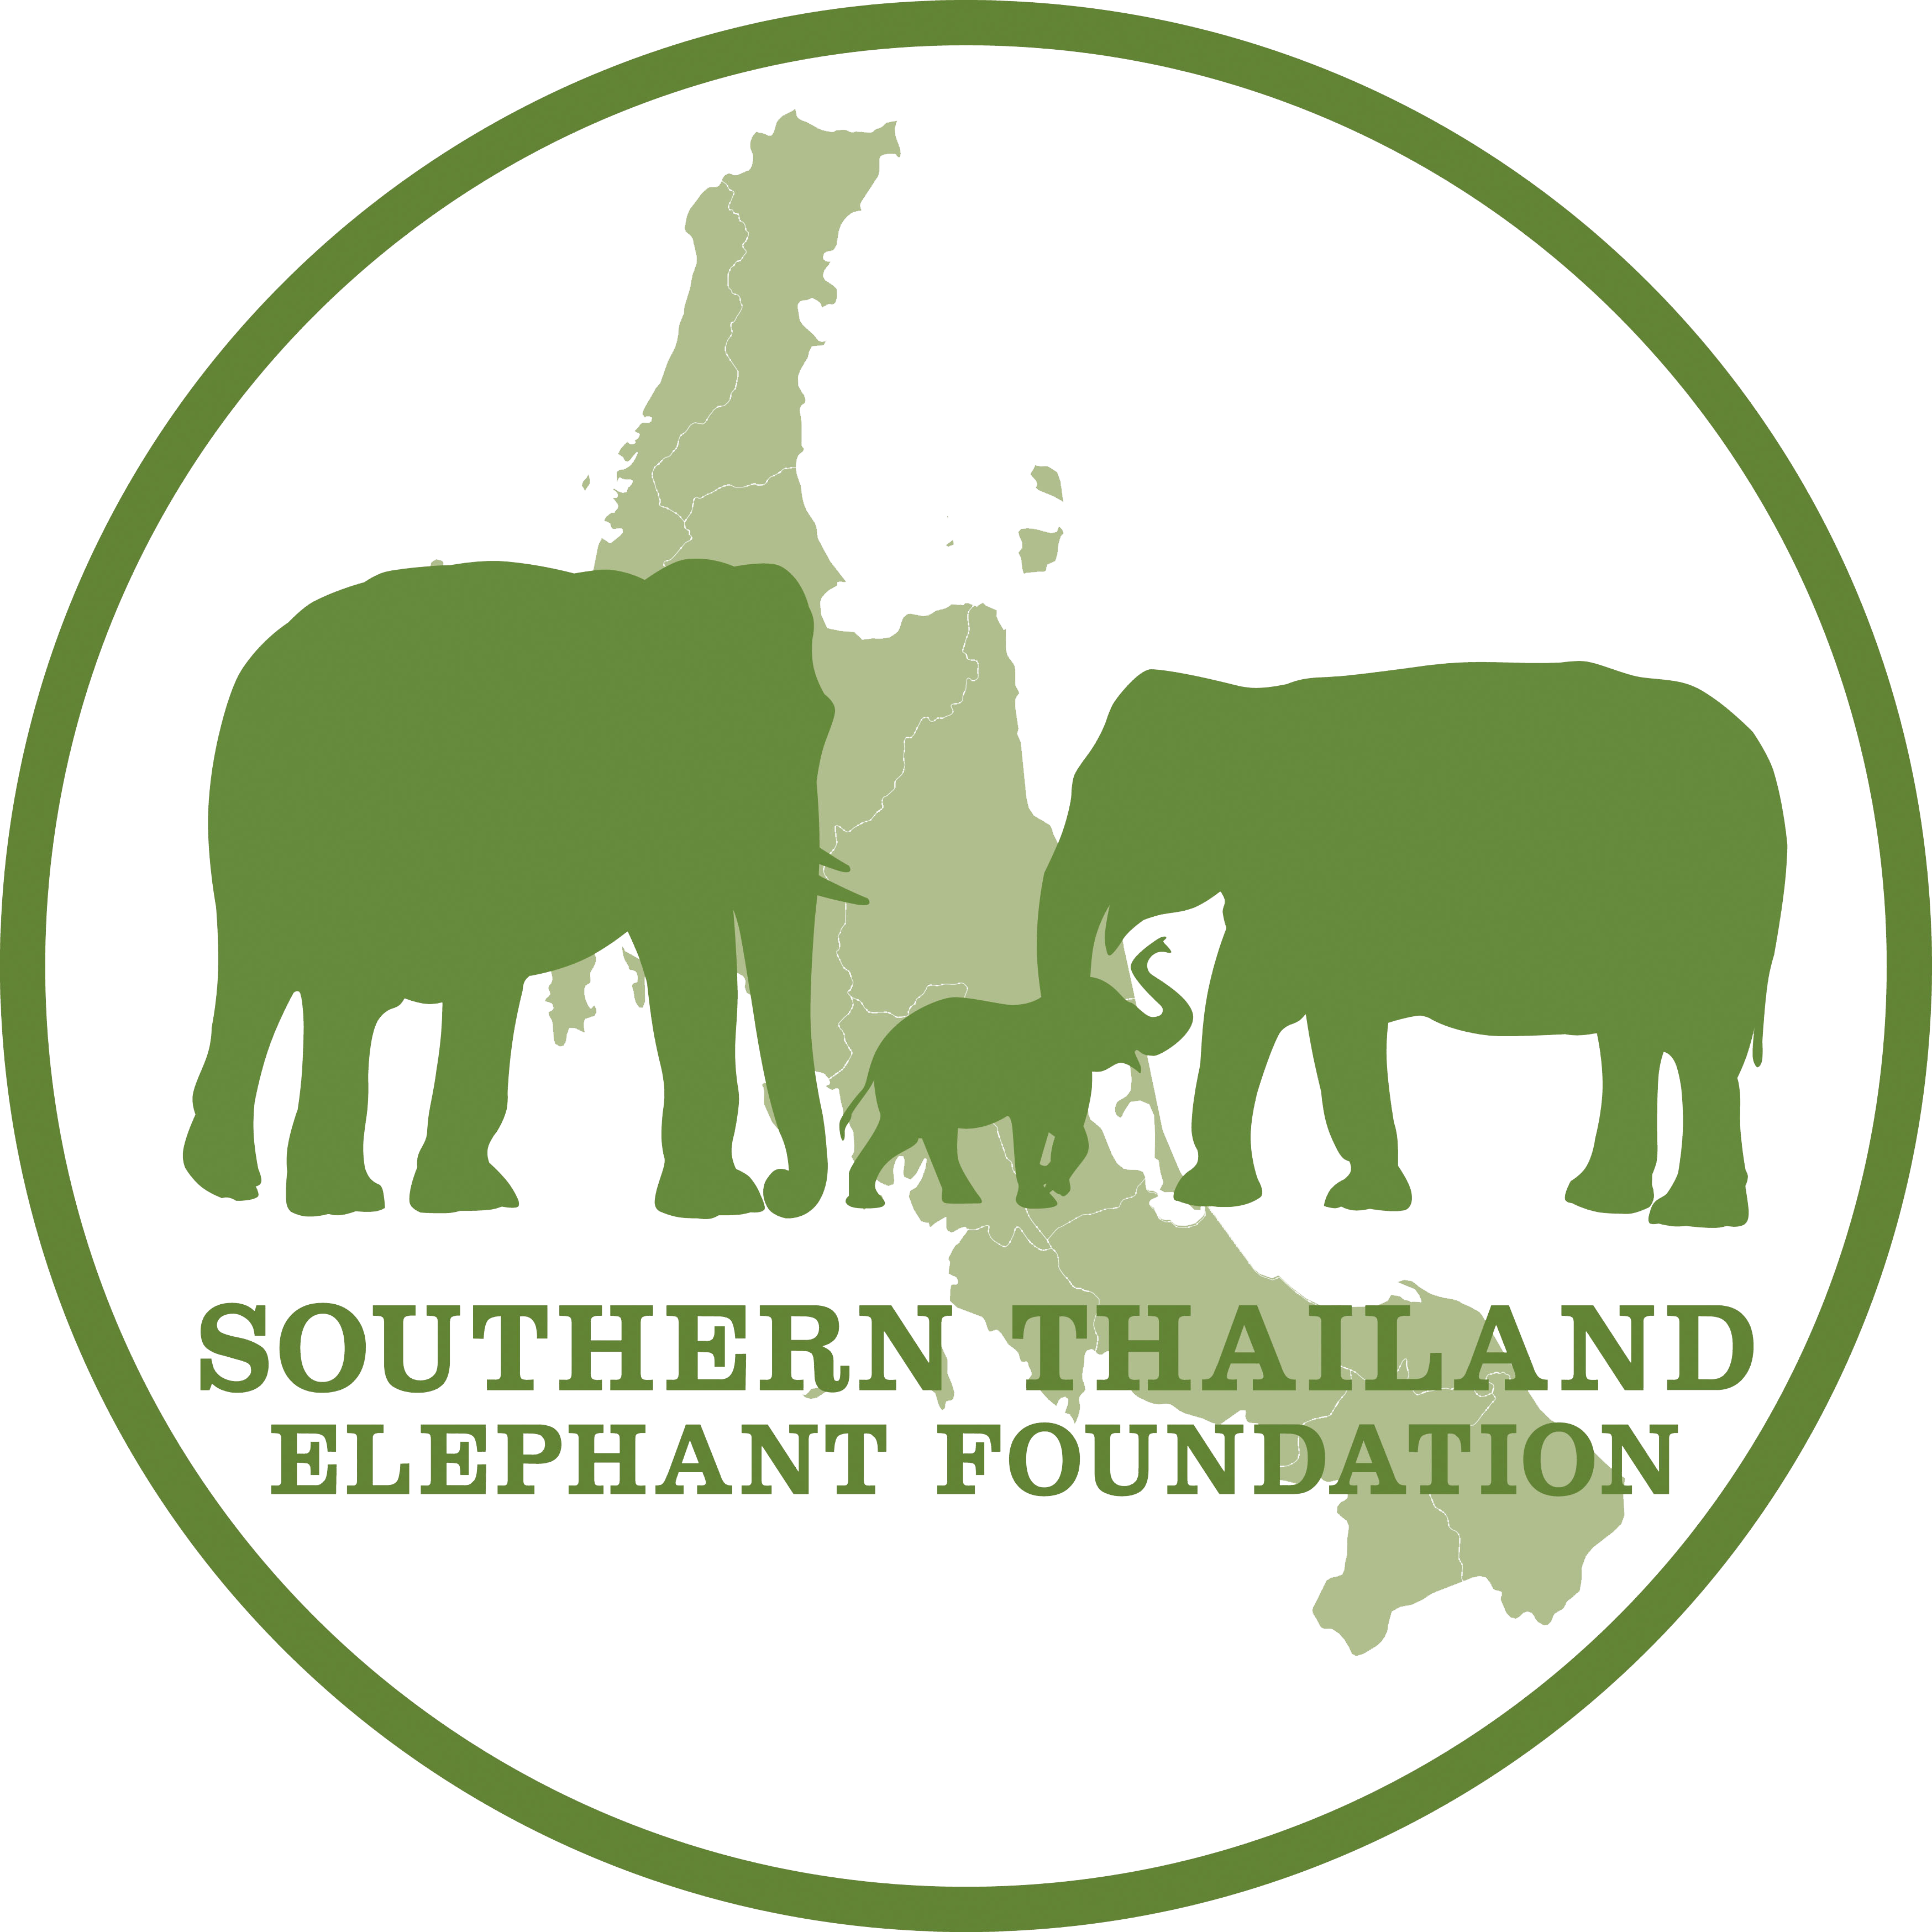 Southern Thailand Elephant Foundation logo